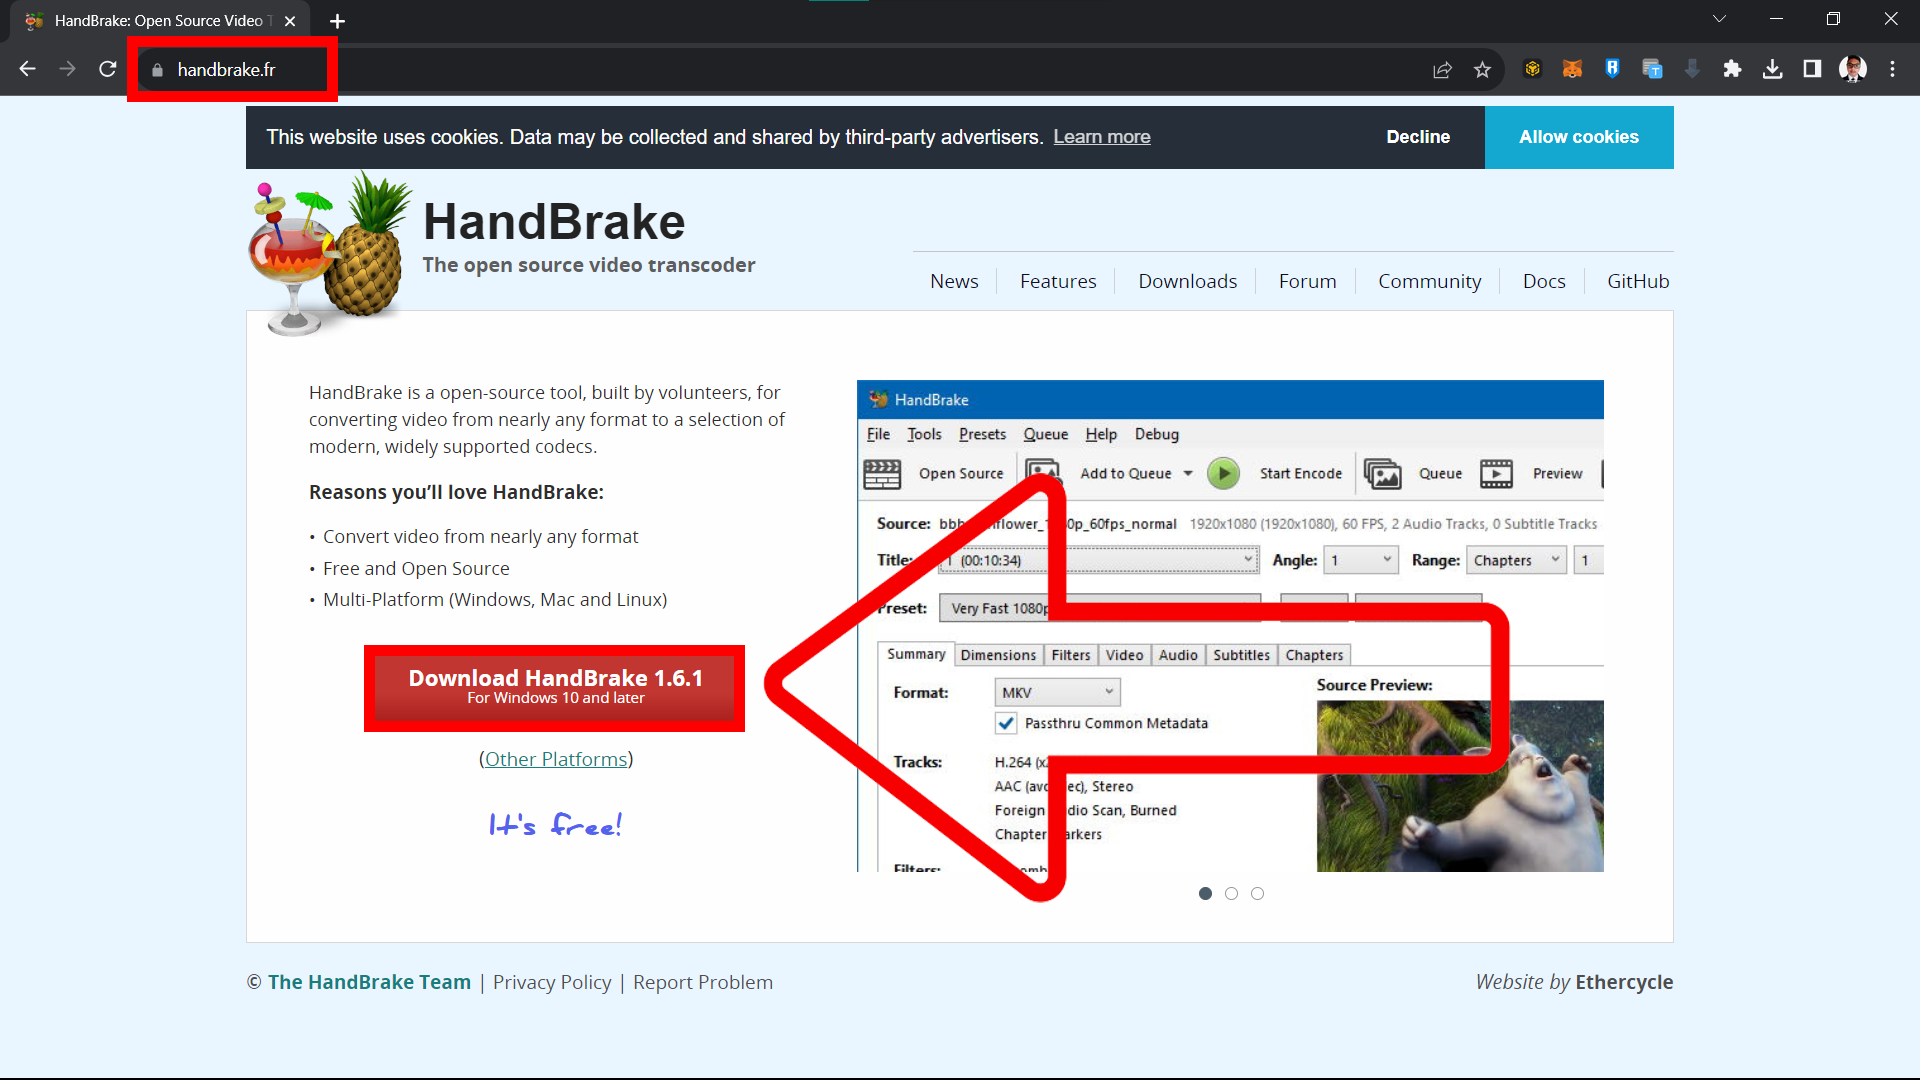 How To Use Handbrake on Windows: Step 1